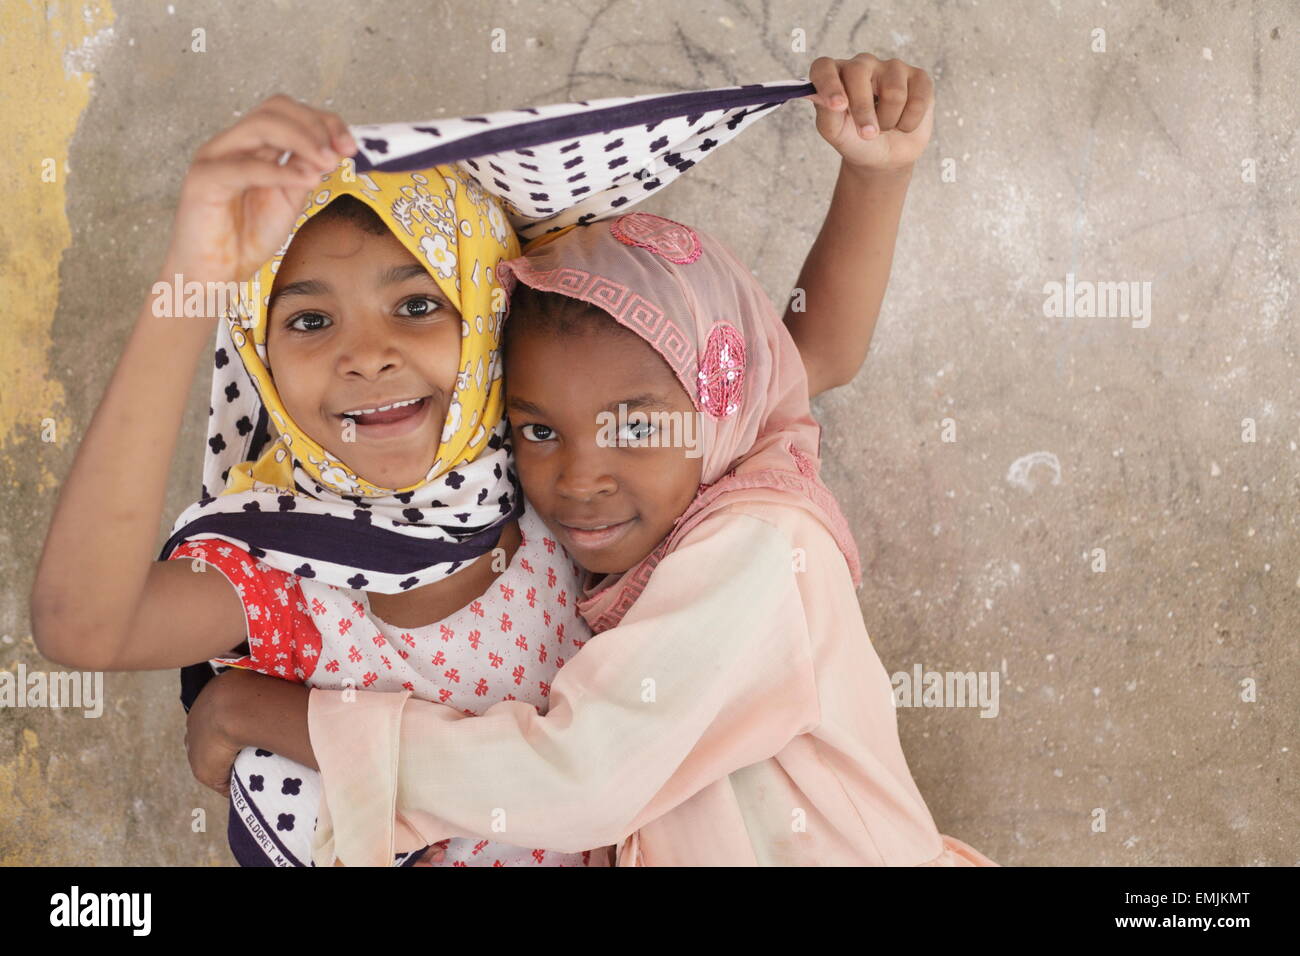 Two young girls in saris, Stone town, Zanzibar Stock Photo